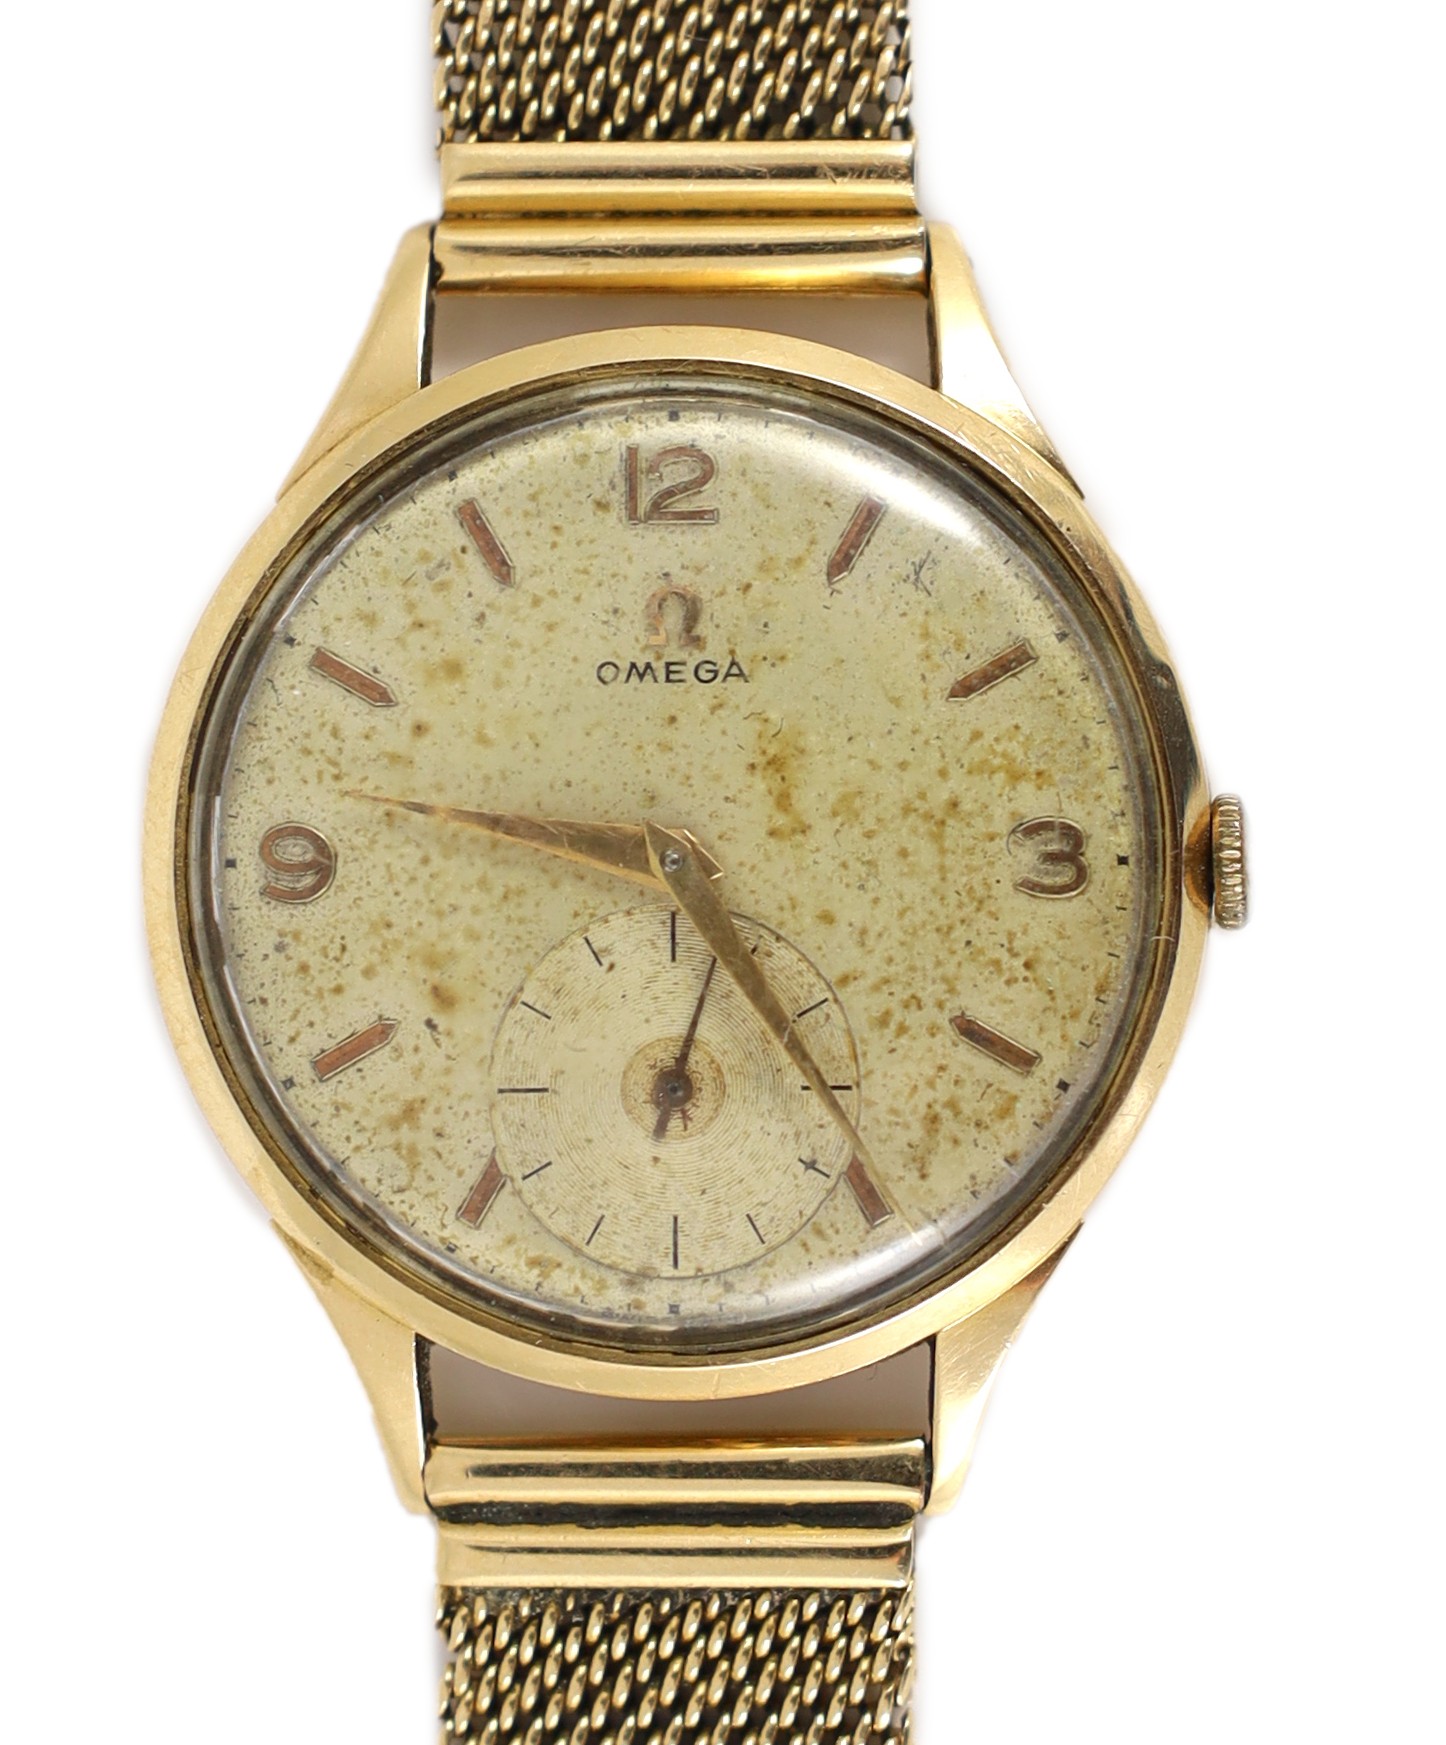 A gentleman's 1950's 18ct gold Omega manual wind wrist watch, on an Italian 750 yellow metal mesh link bracelet